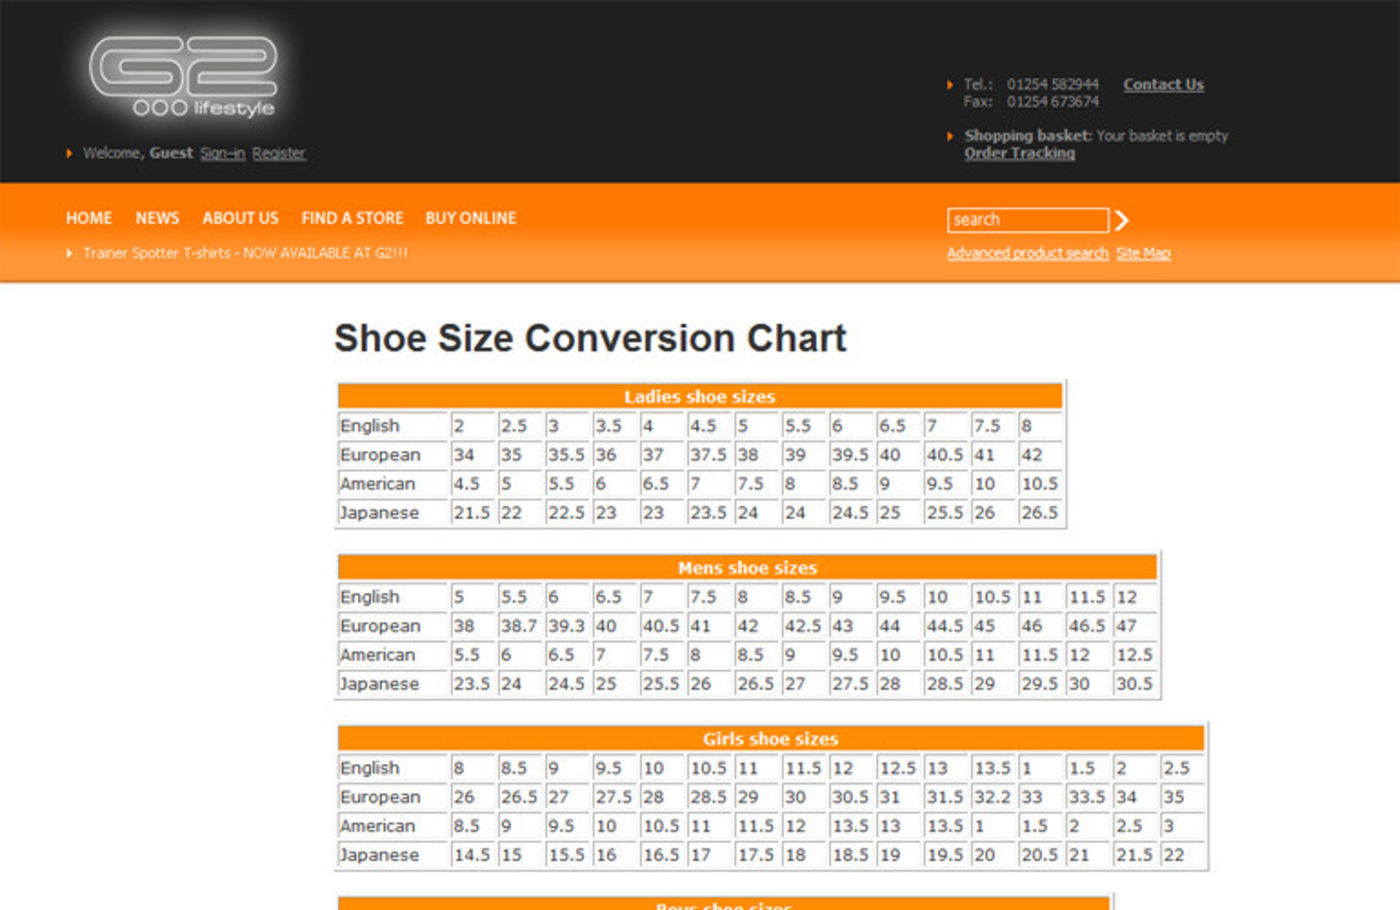 G2 Lifestyle Shoe Size Conversion Chart